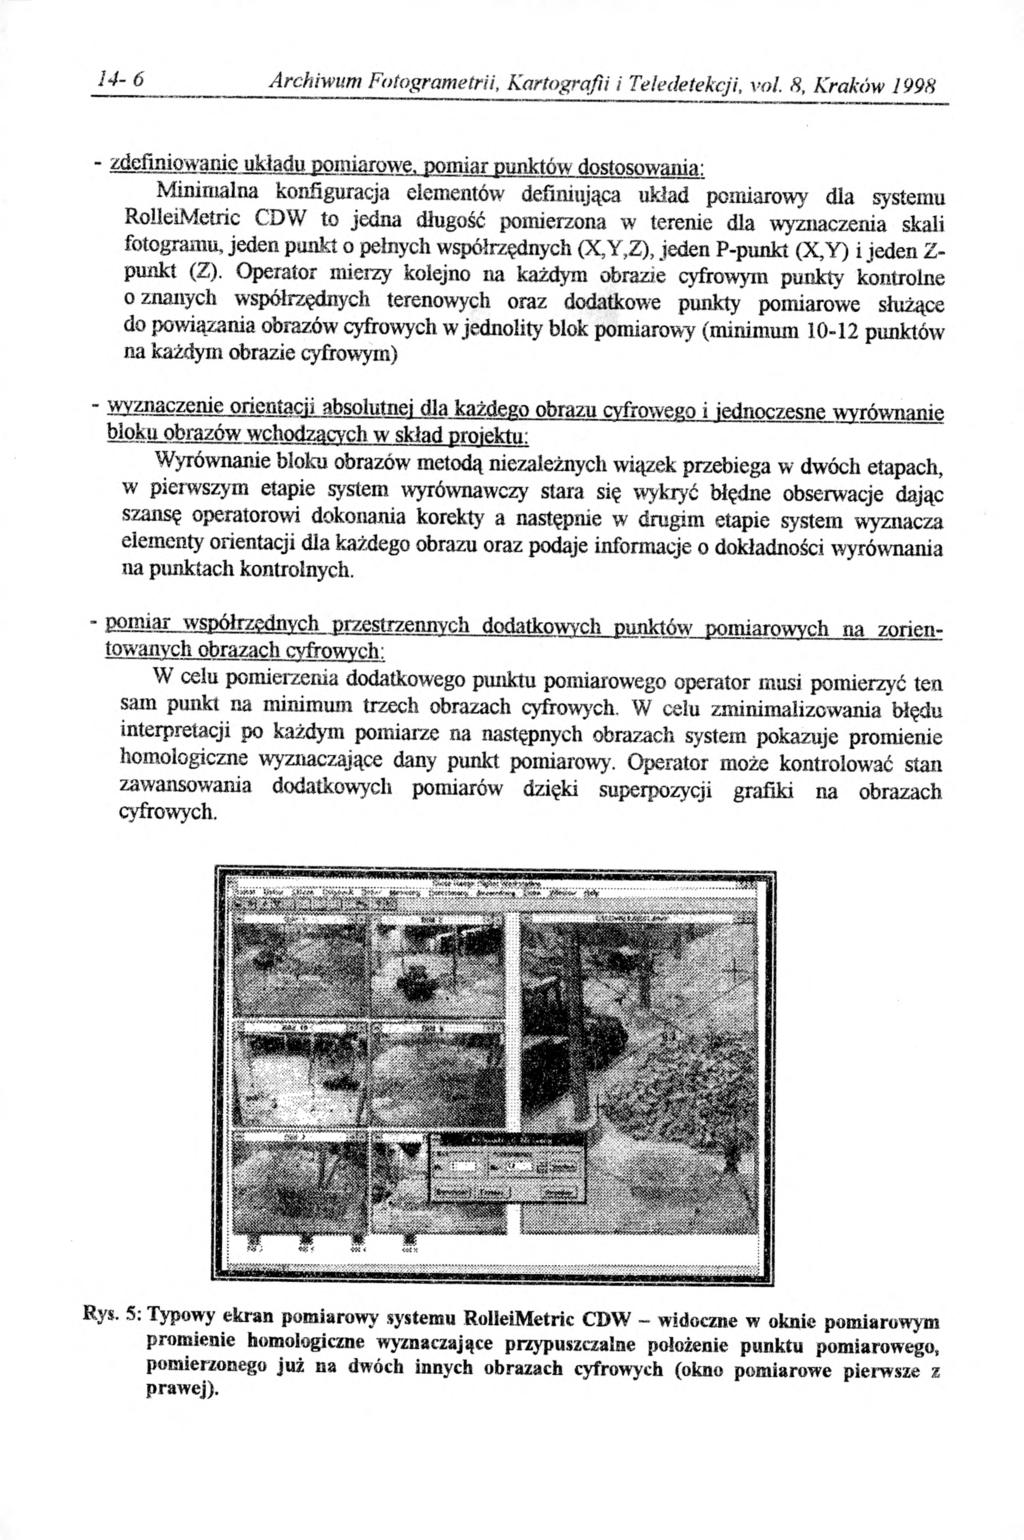 14-6 Archiwum Fotogrametrii, Kartografii i Teledetekcji, vol.